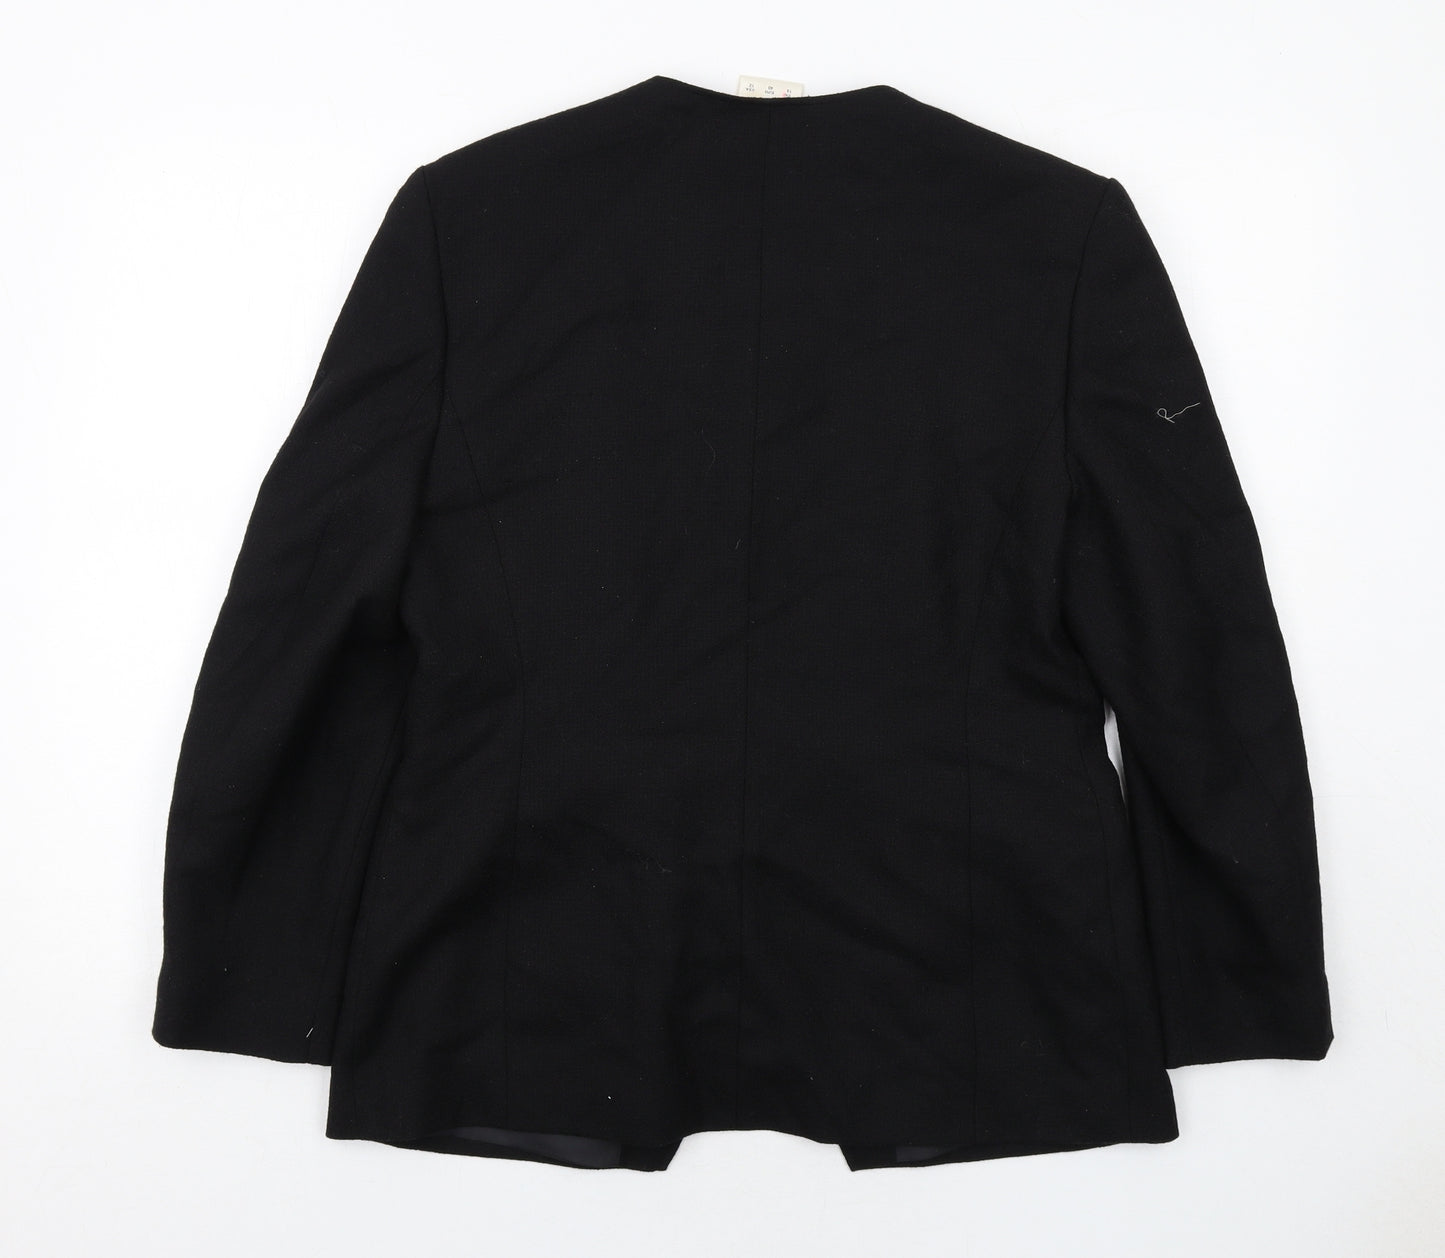 Eastex Womens Black Jacket Blazer Size 14 Button